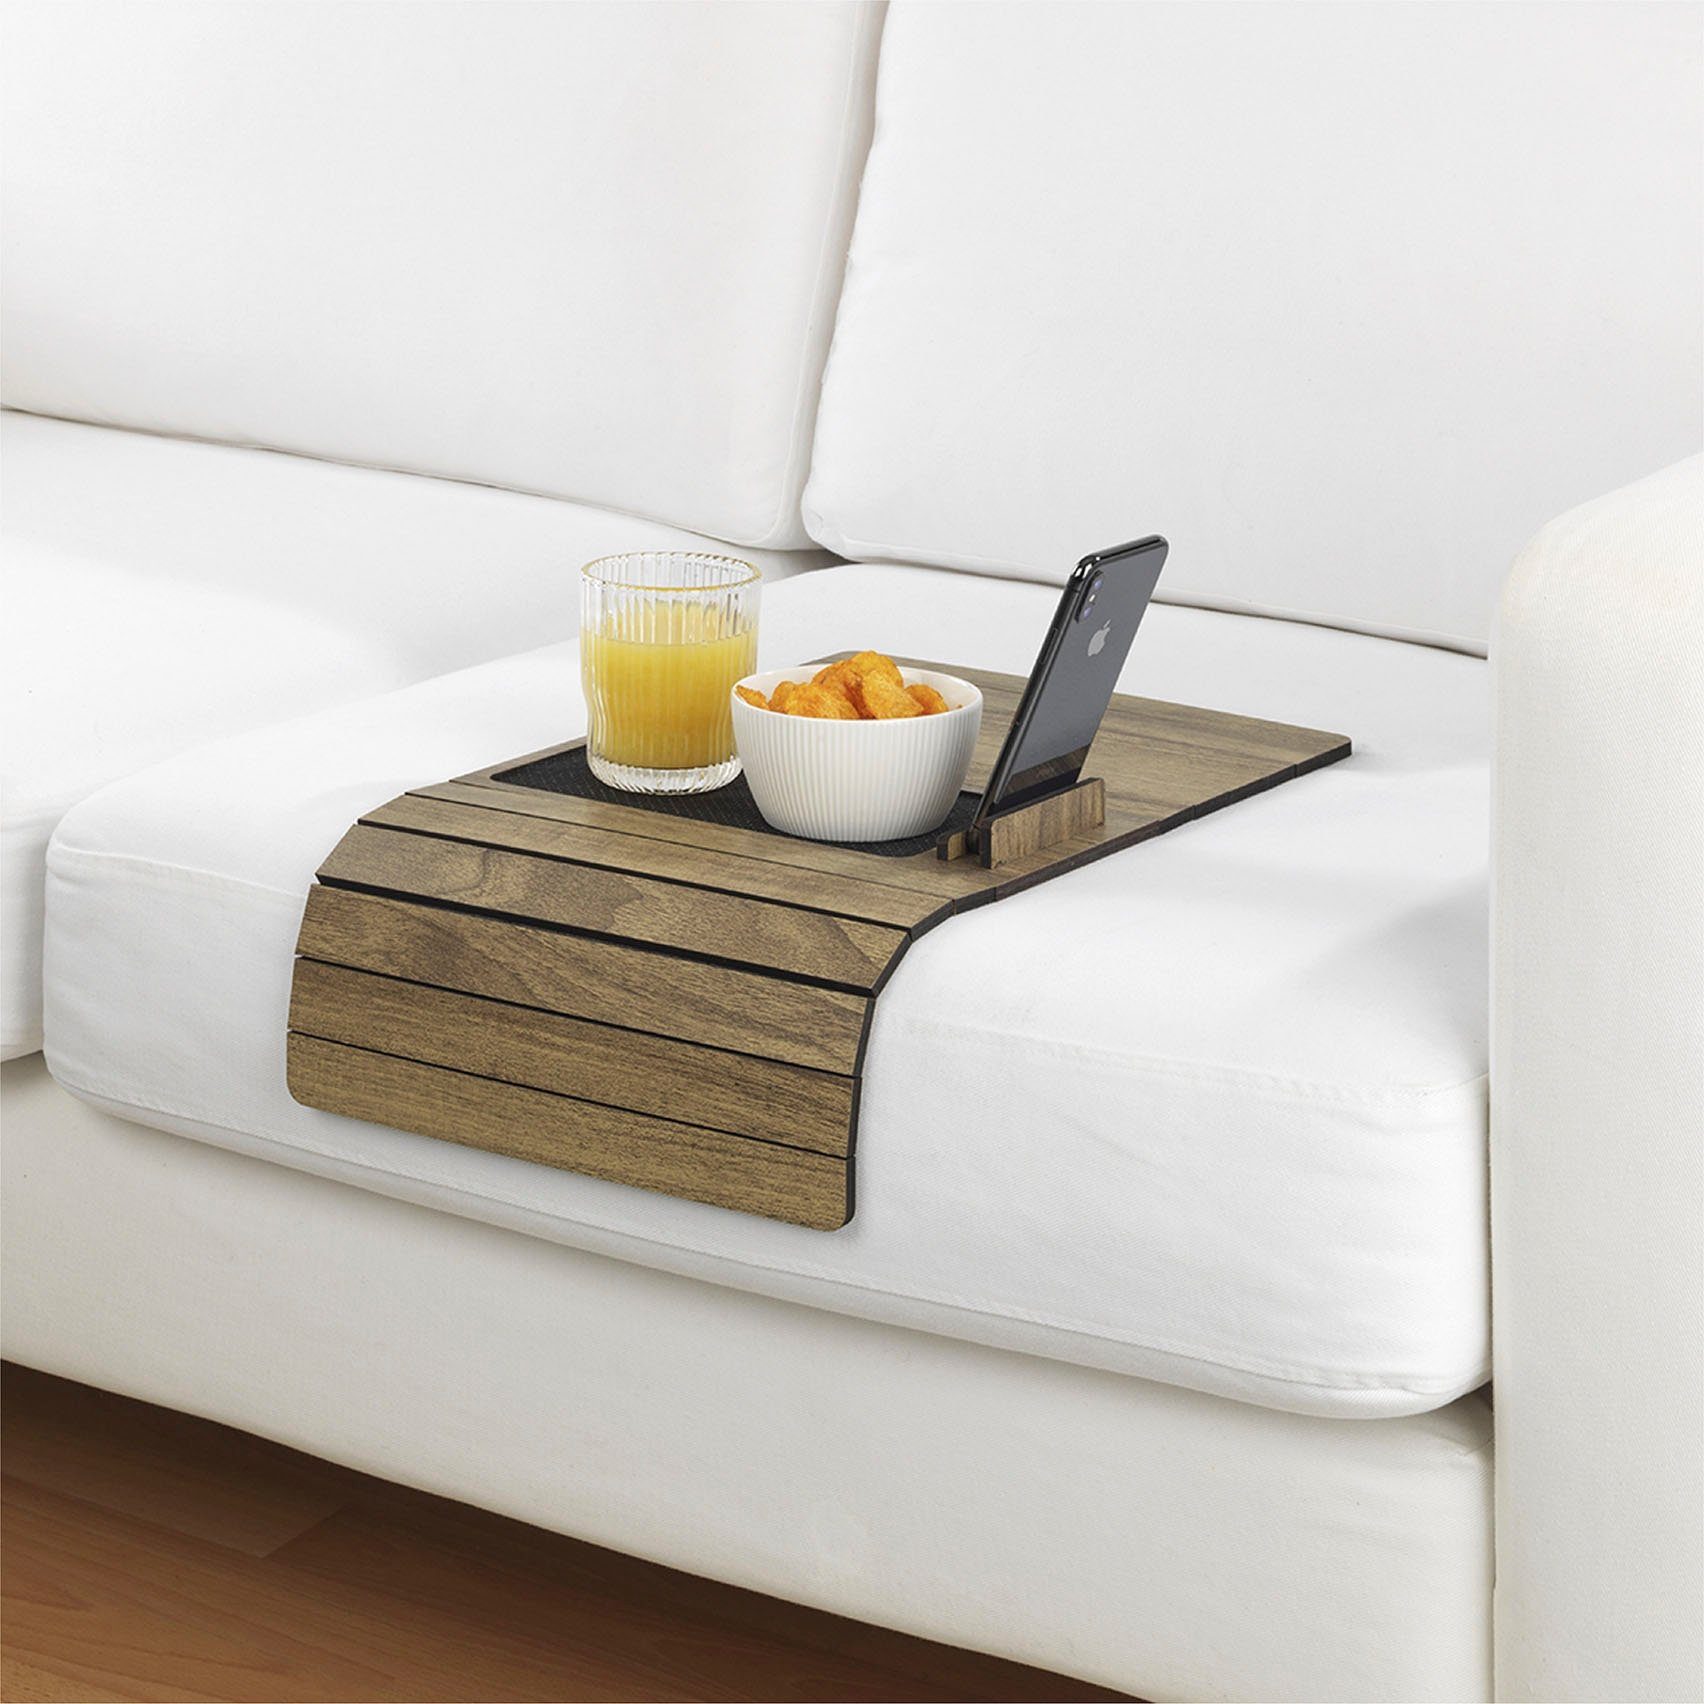 TWSOUL Tablett Sofa-Armlehnenkissen aus Bambus mit Getränkehalter